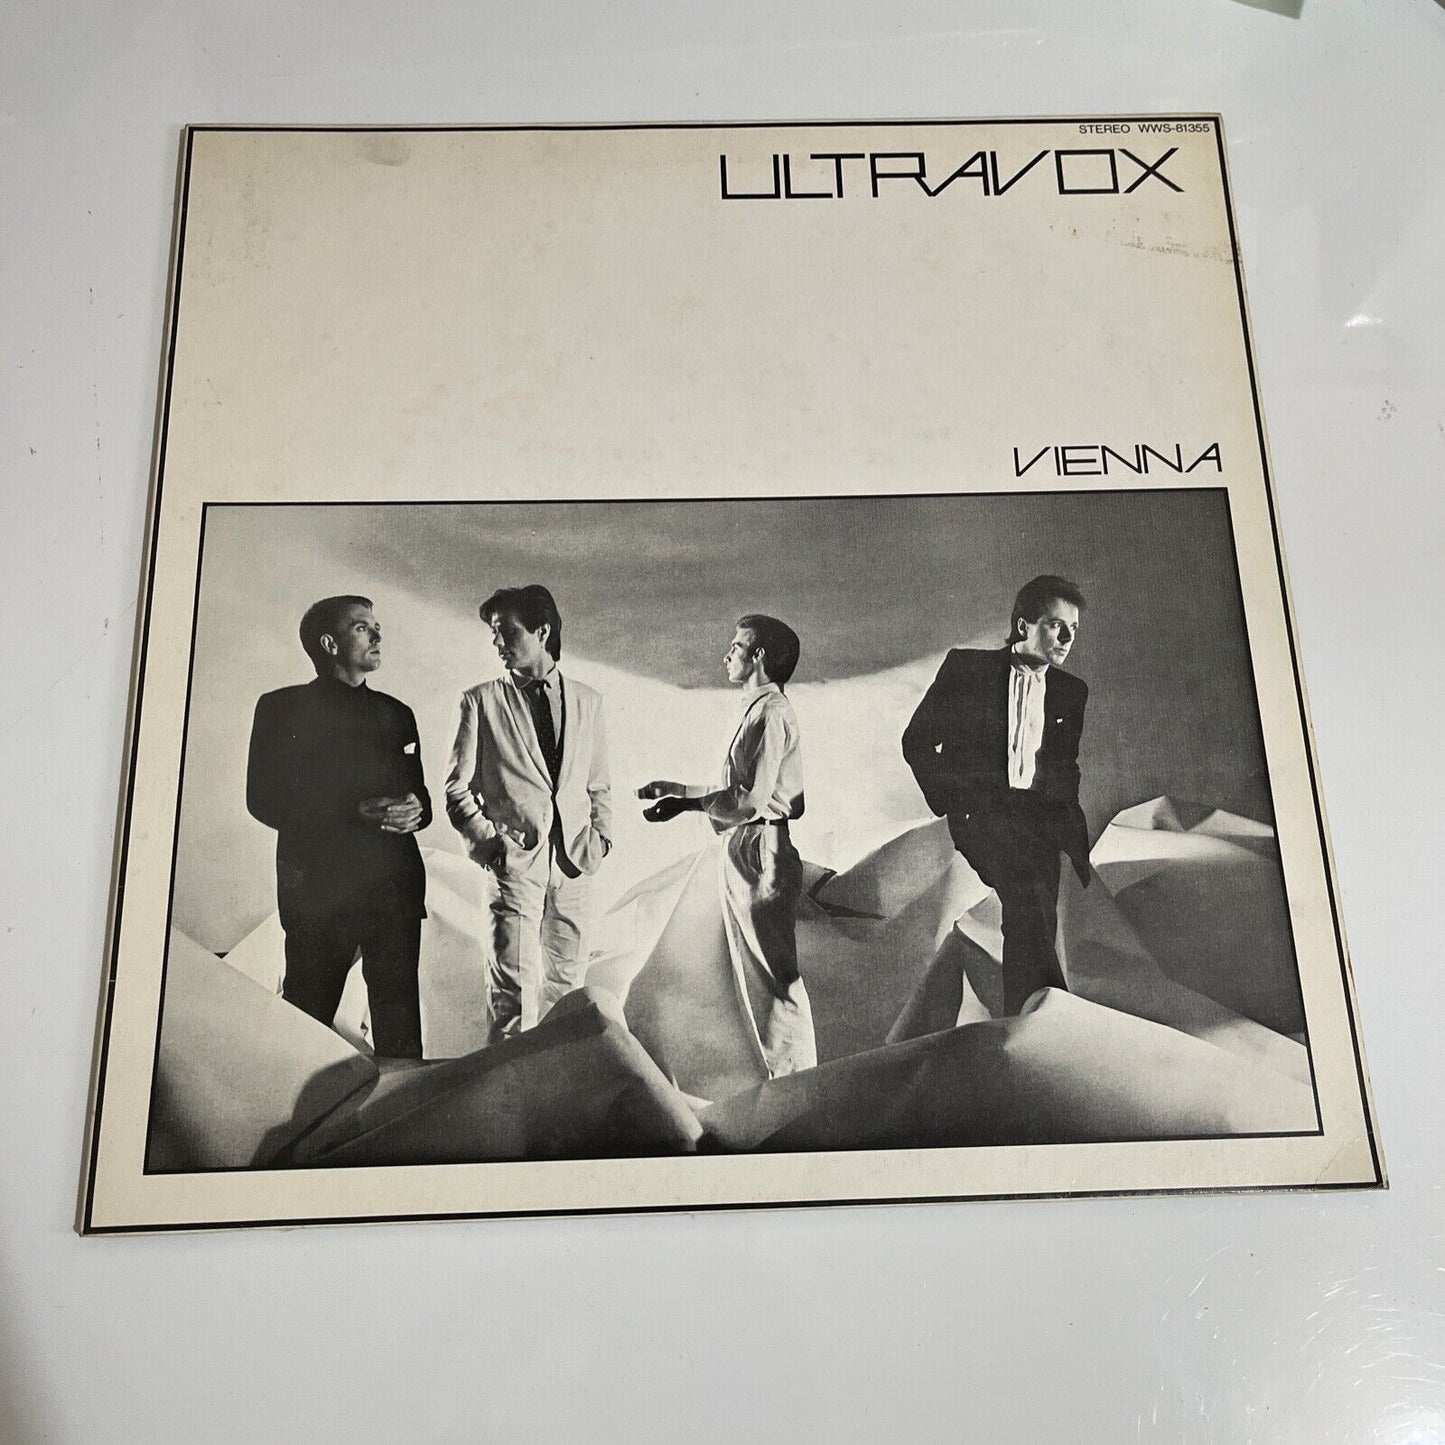 Ultravox – Vienna 1980 LP Vinyl Record Japan WWS-81355